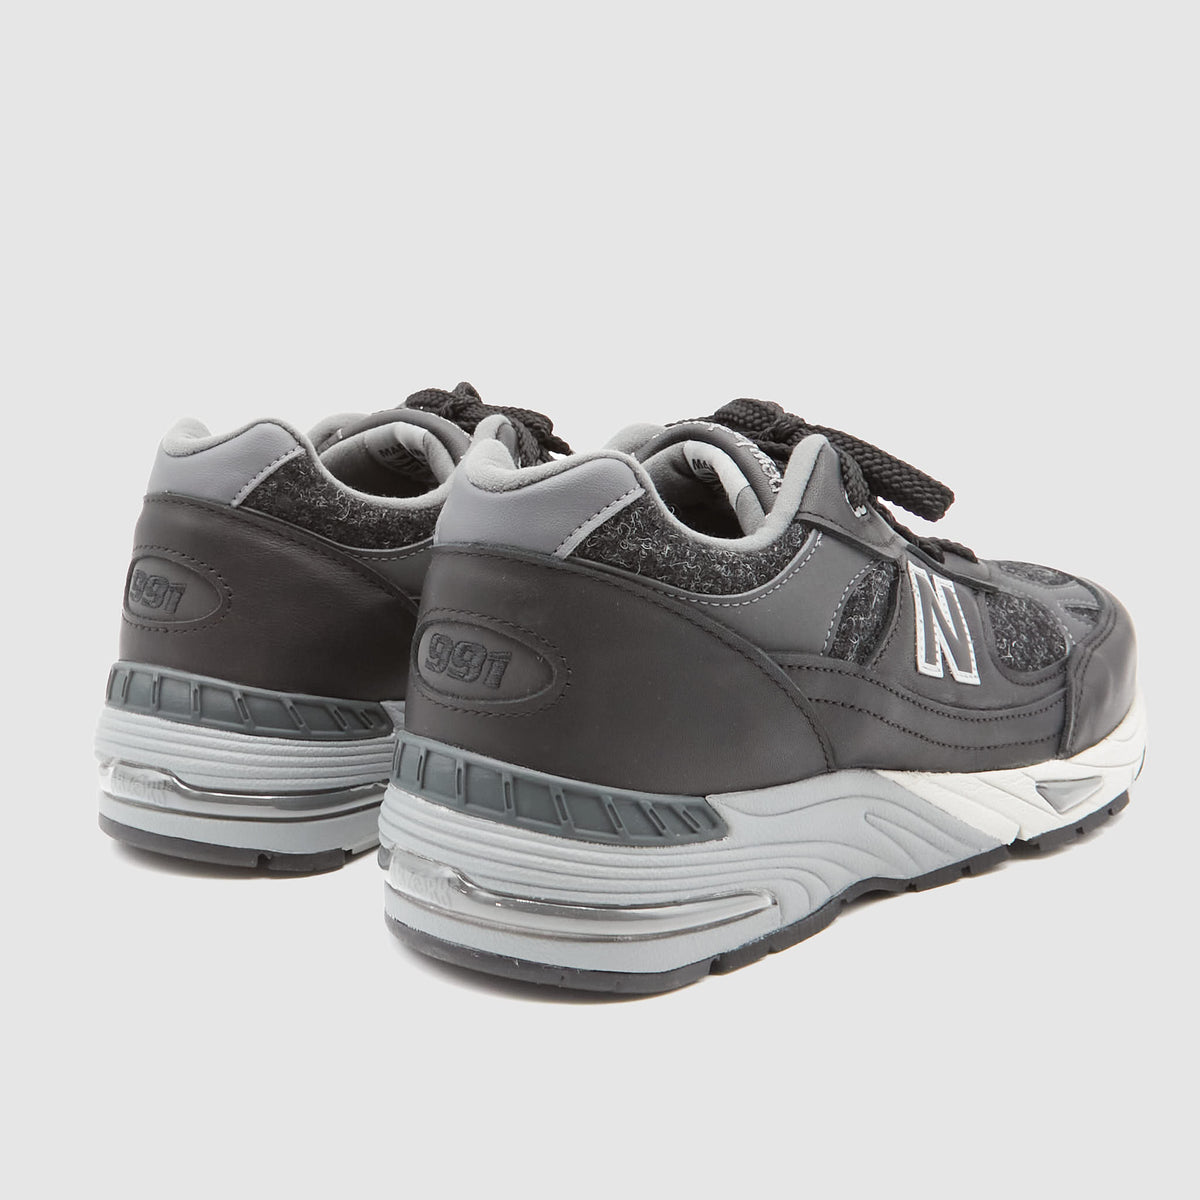 New Balance Made in England 991 Harris Tweed® Sneakers